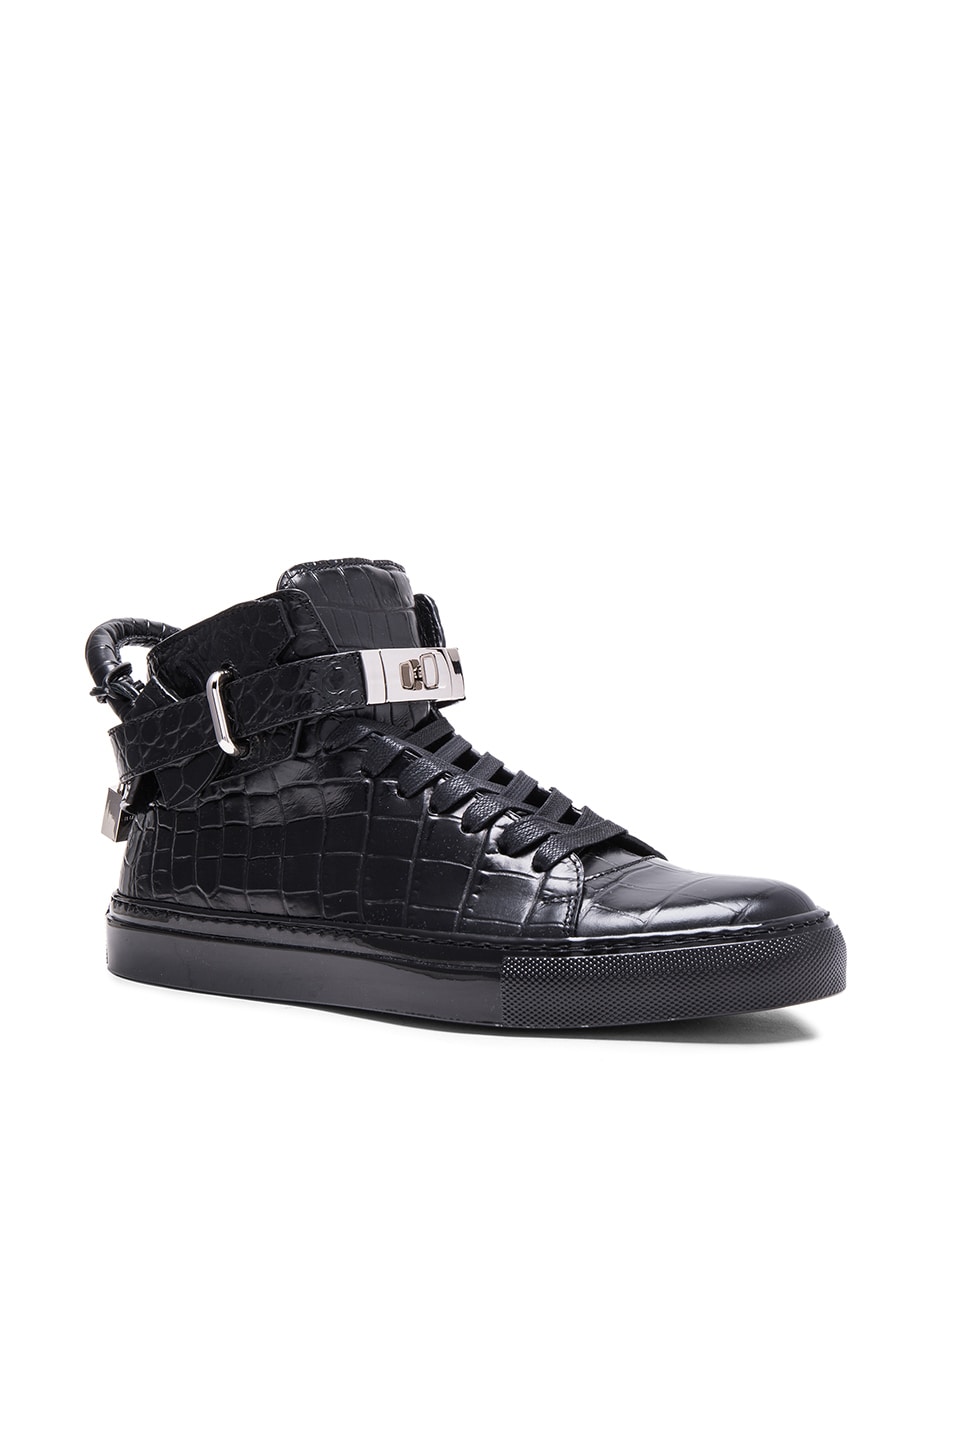 Buscemi 100MM Croc Embossed Leather Sneakers in Black | FWRD